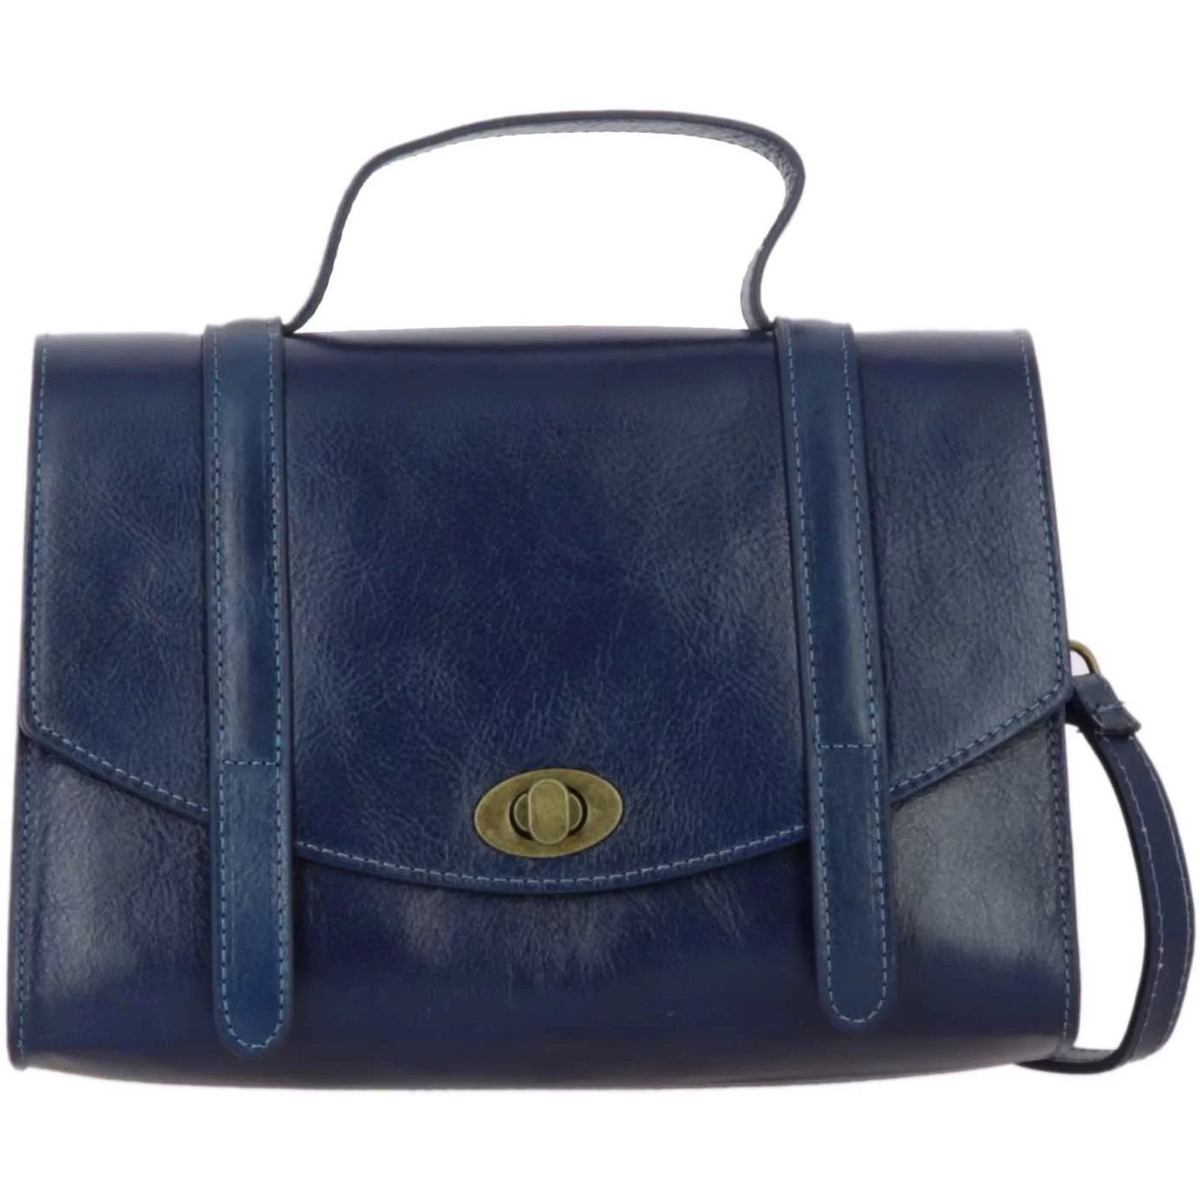 Dupond Durand Bleu YORK sac à main cartable vintage en cuir G4yhz3p8